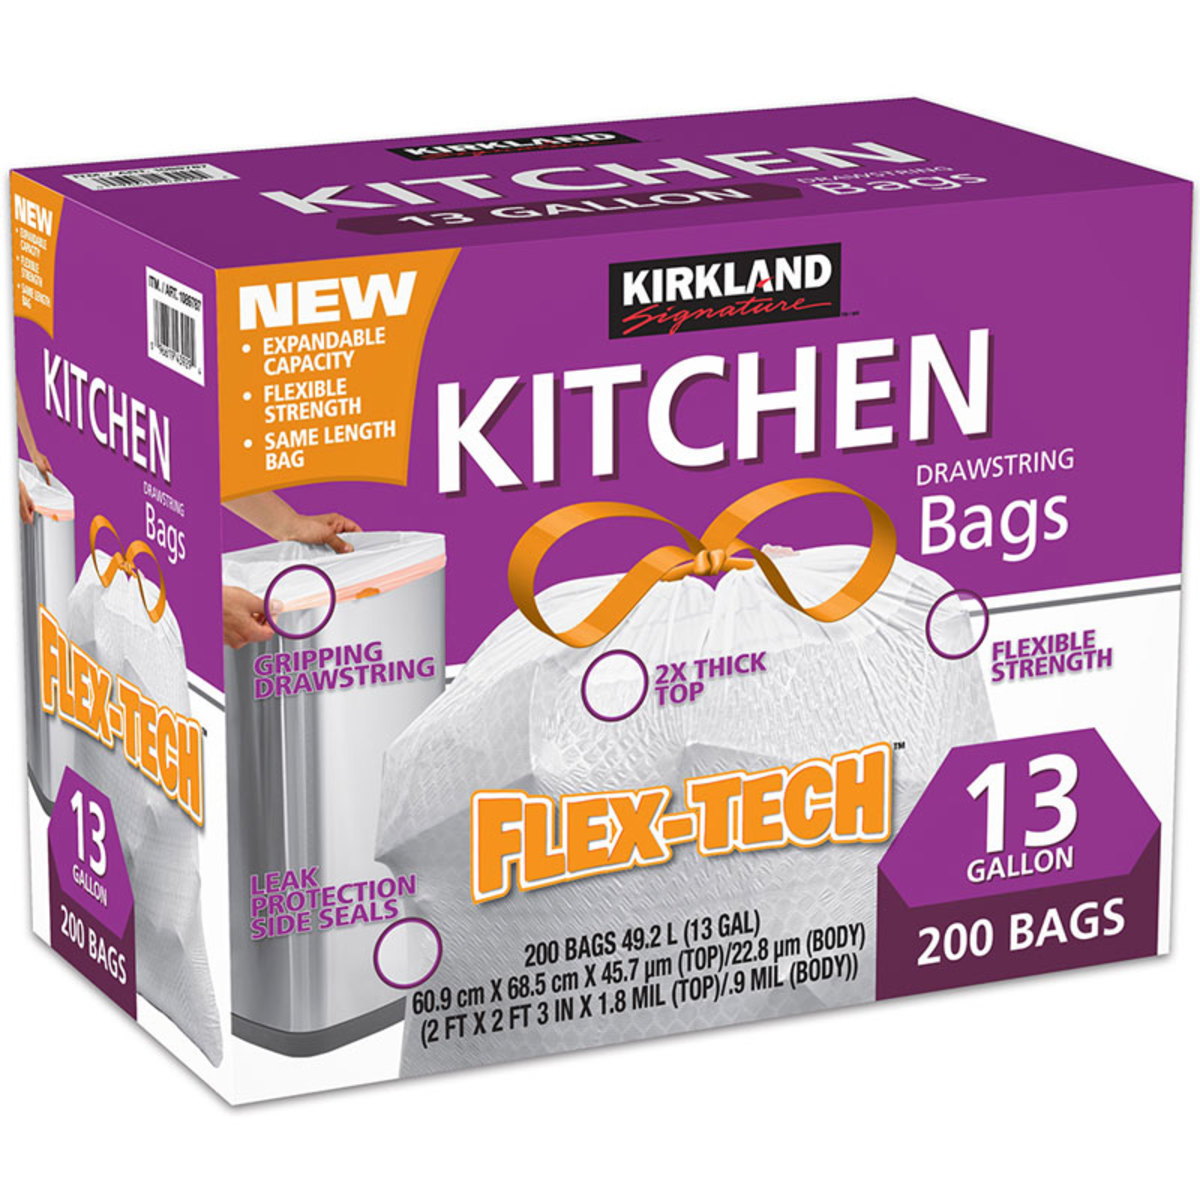 Kirkland Signature Pack of 200 Drawstring Kitchen Bags (49.2L Bags)